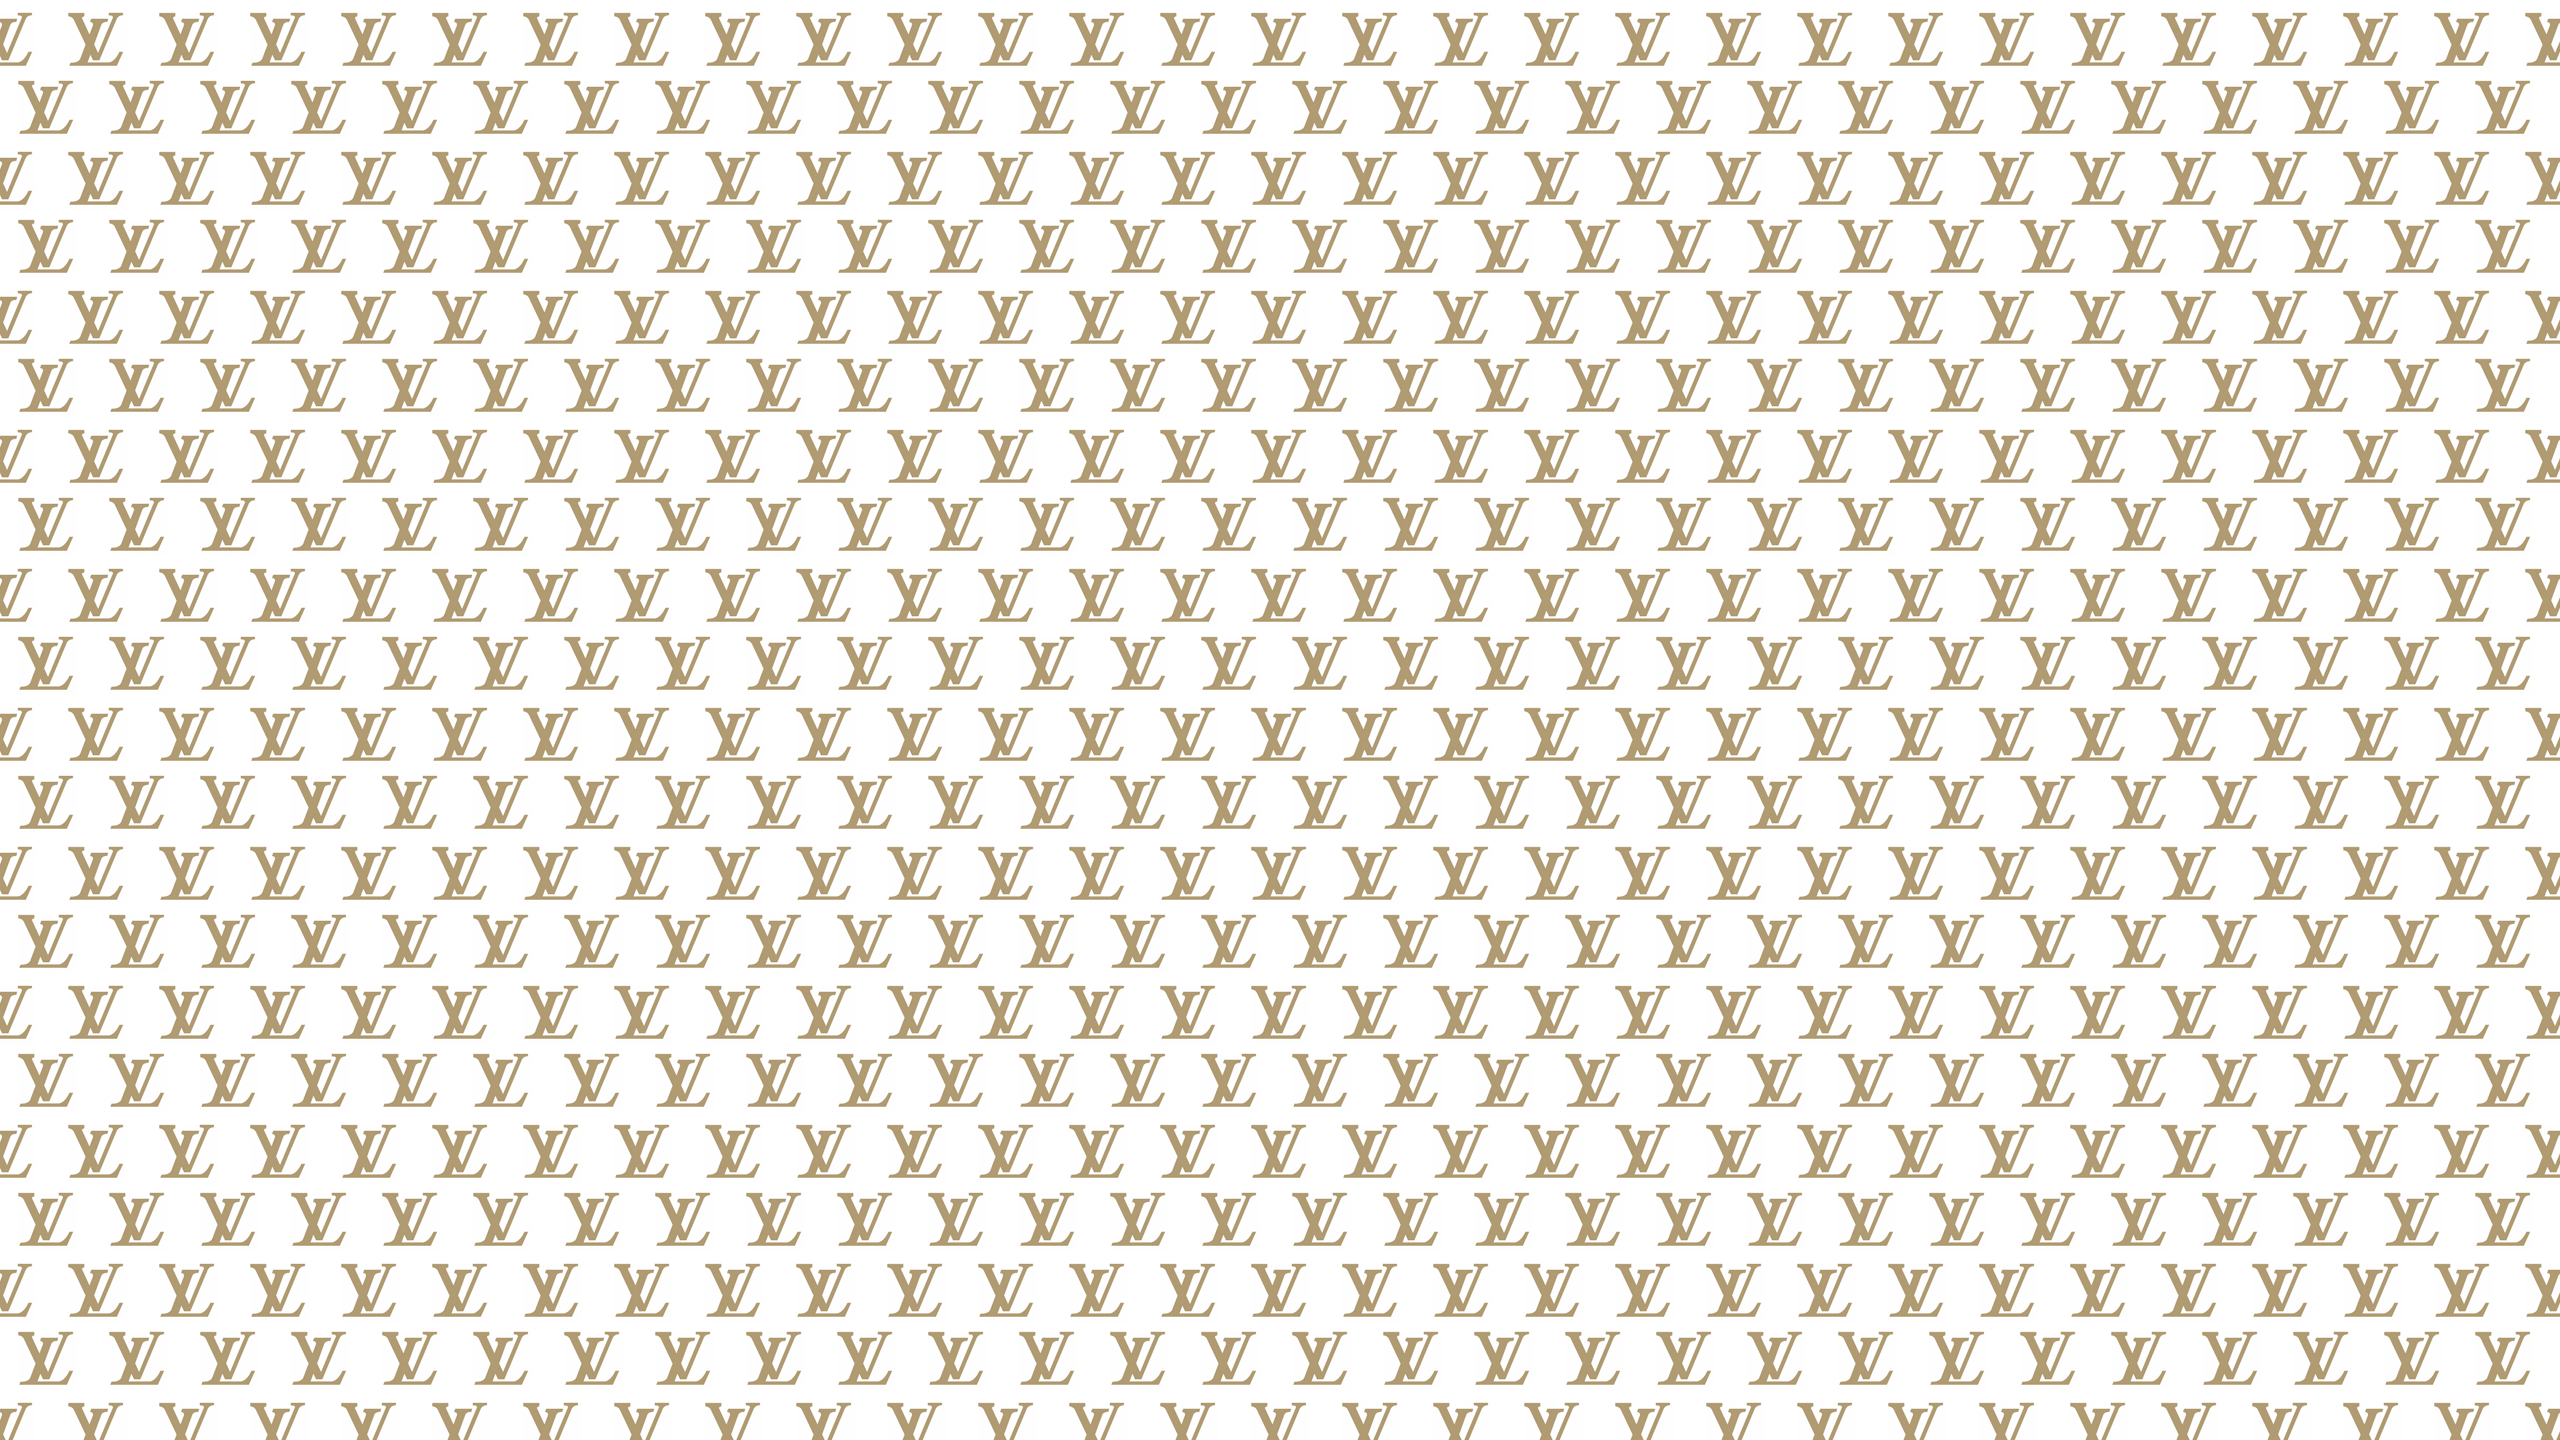 Gold Louis Vuitton Desktop Wallpaper is easy Just save the wallpaper 2560x1440